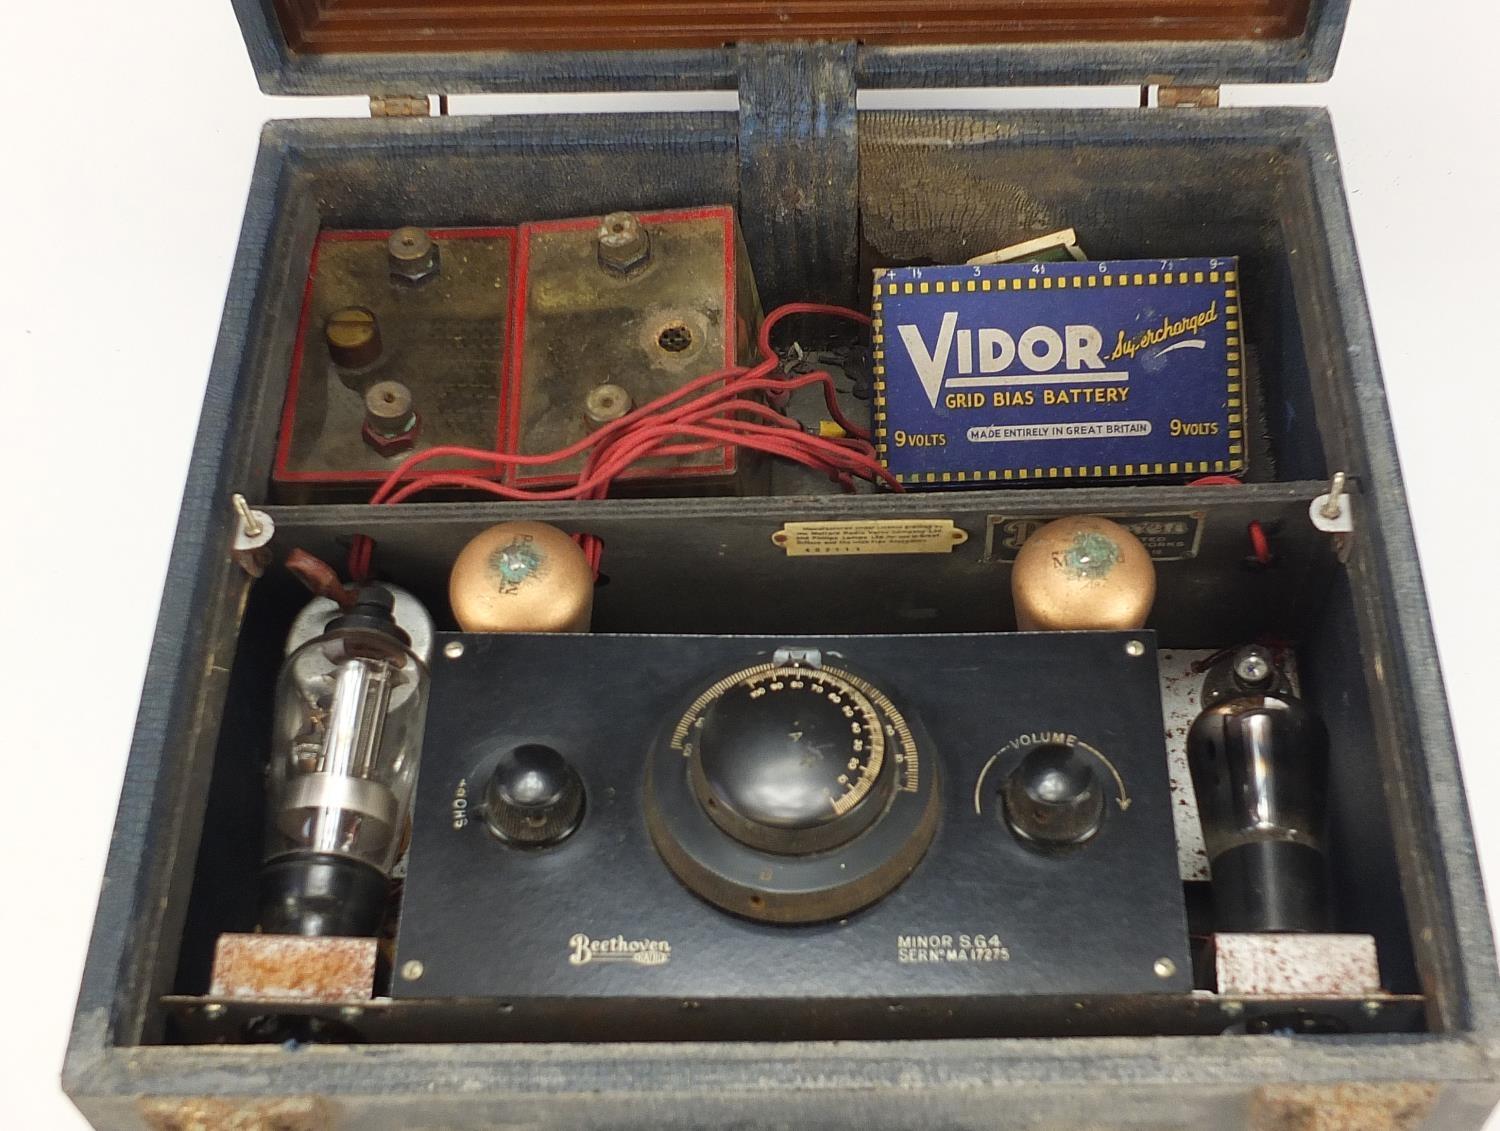 Vintage Beethoven radio with original Vidor battery, 23.5cm H x 35cm W x 33cm D - Image 4 of 7